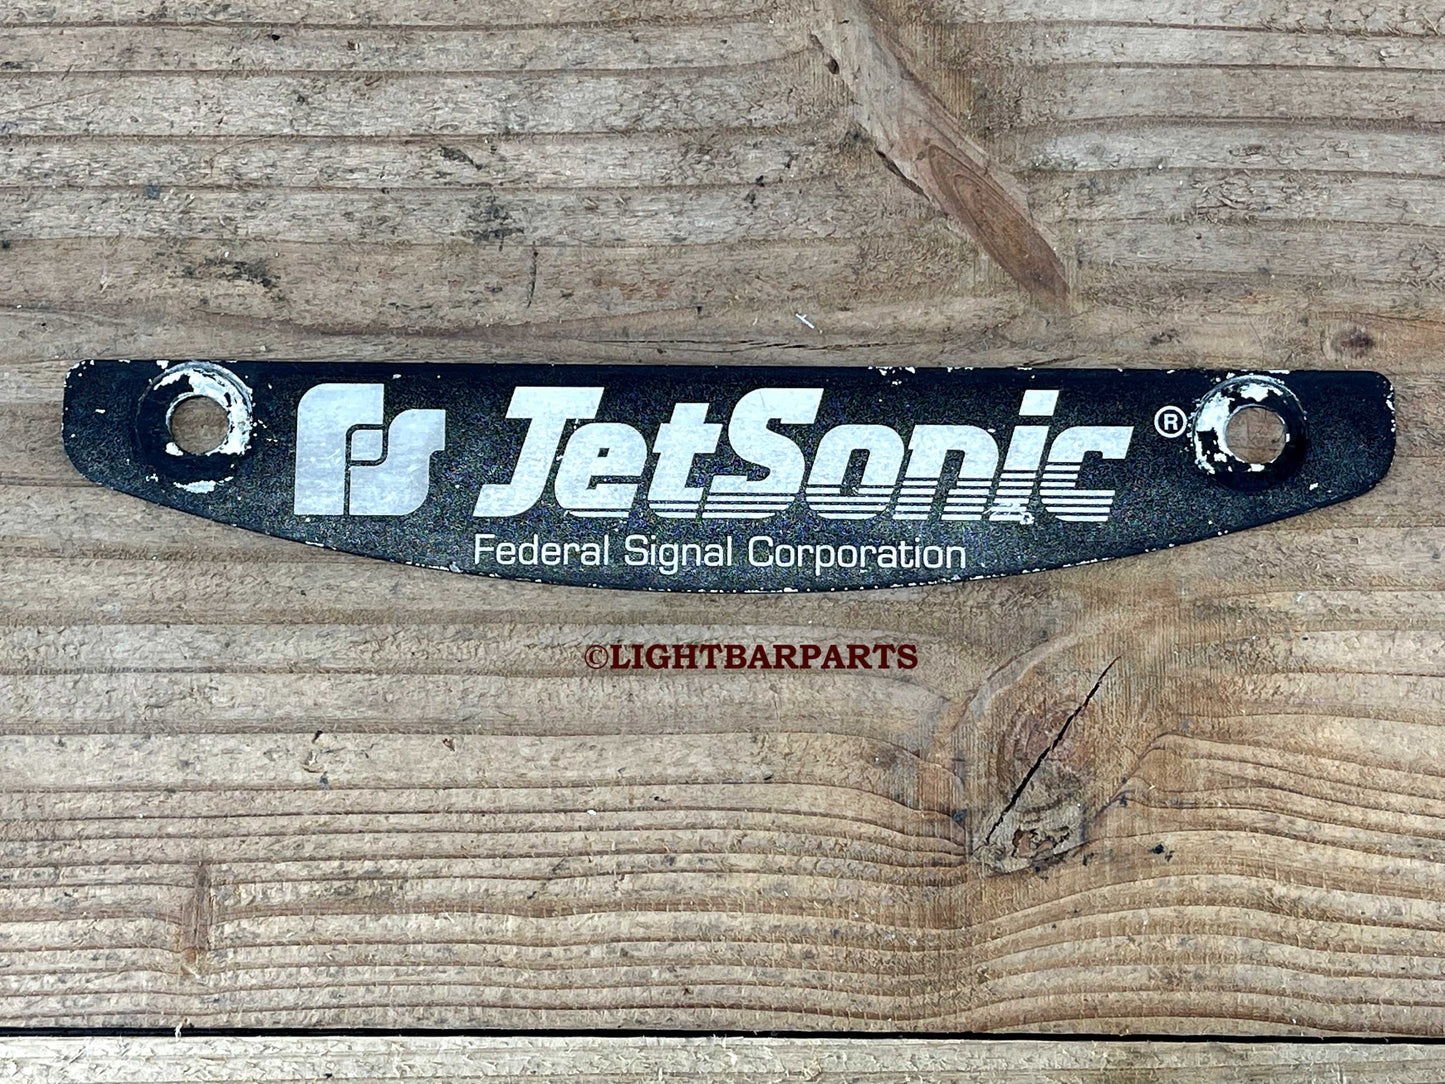 Federal Signal Jetsonic Lightbar - Endcap Name Plate - Metal - End Cap